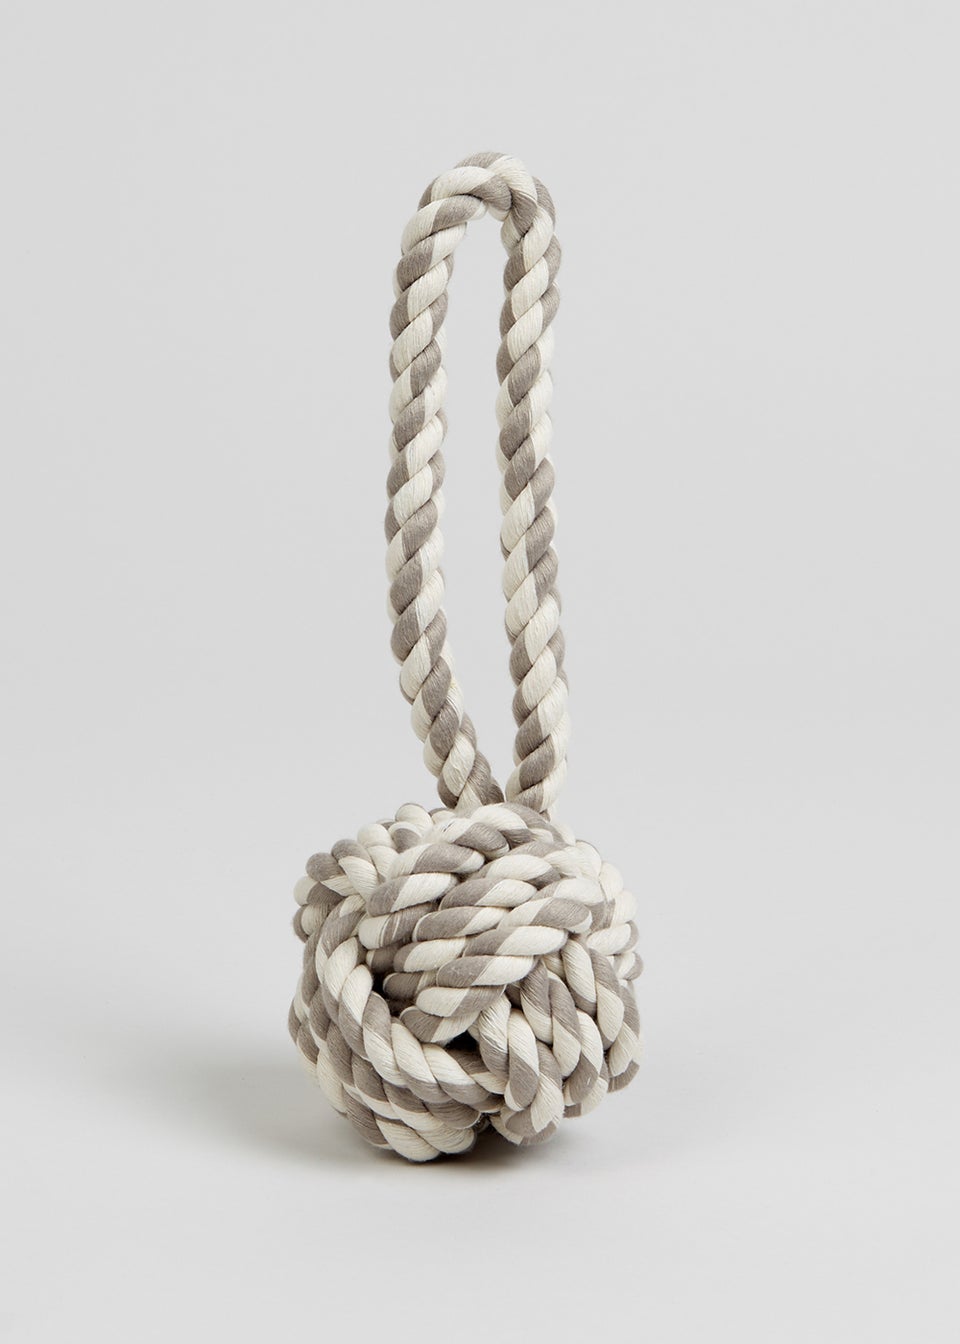 Grey Rope Knot Dog Toy (22cm x 8cm x 8cm)